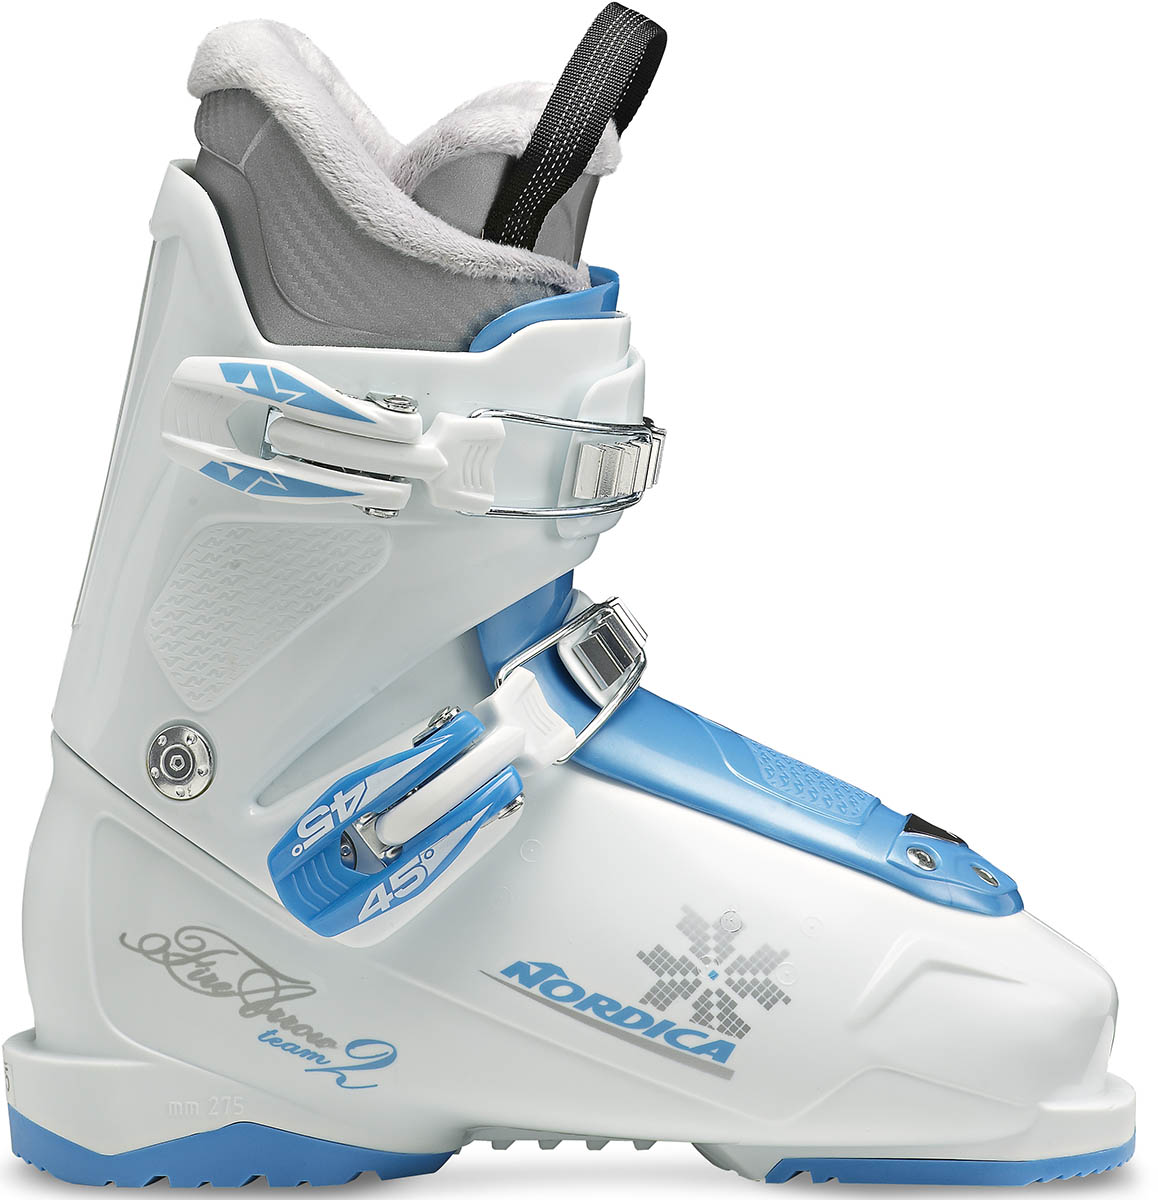 FIREARROW TEAM 2 - Childrens ski boots